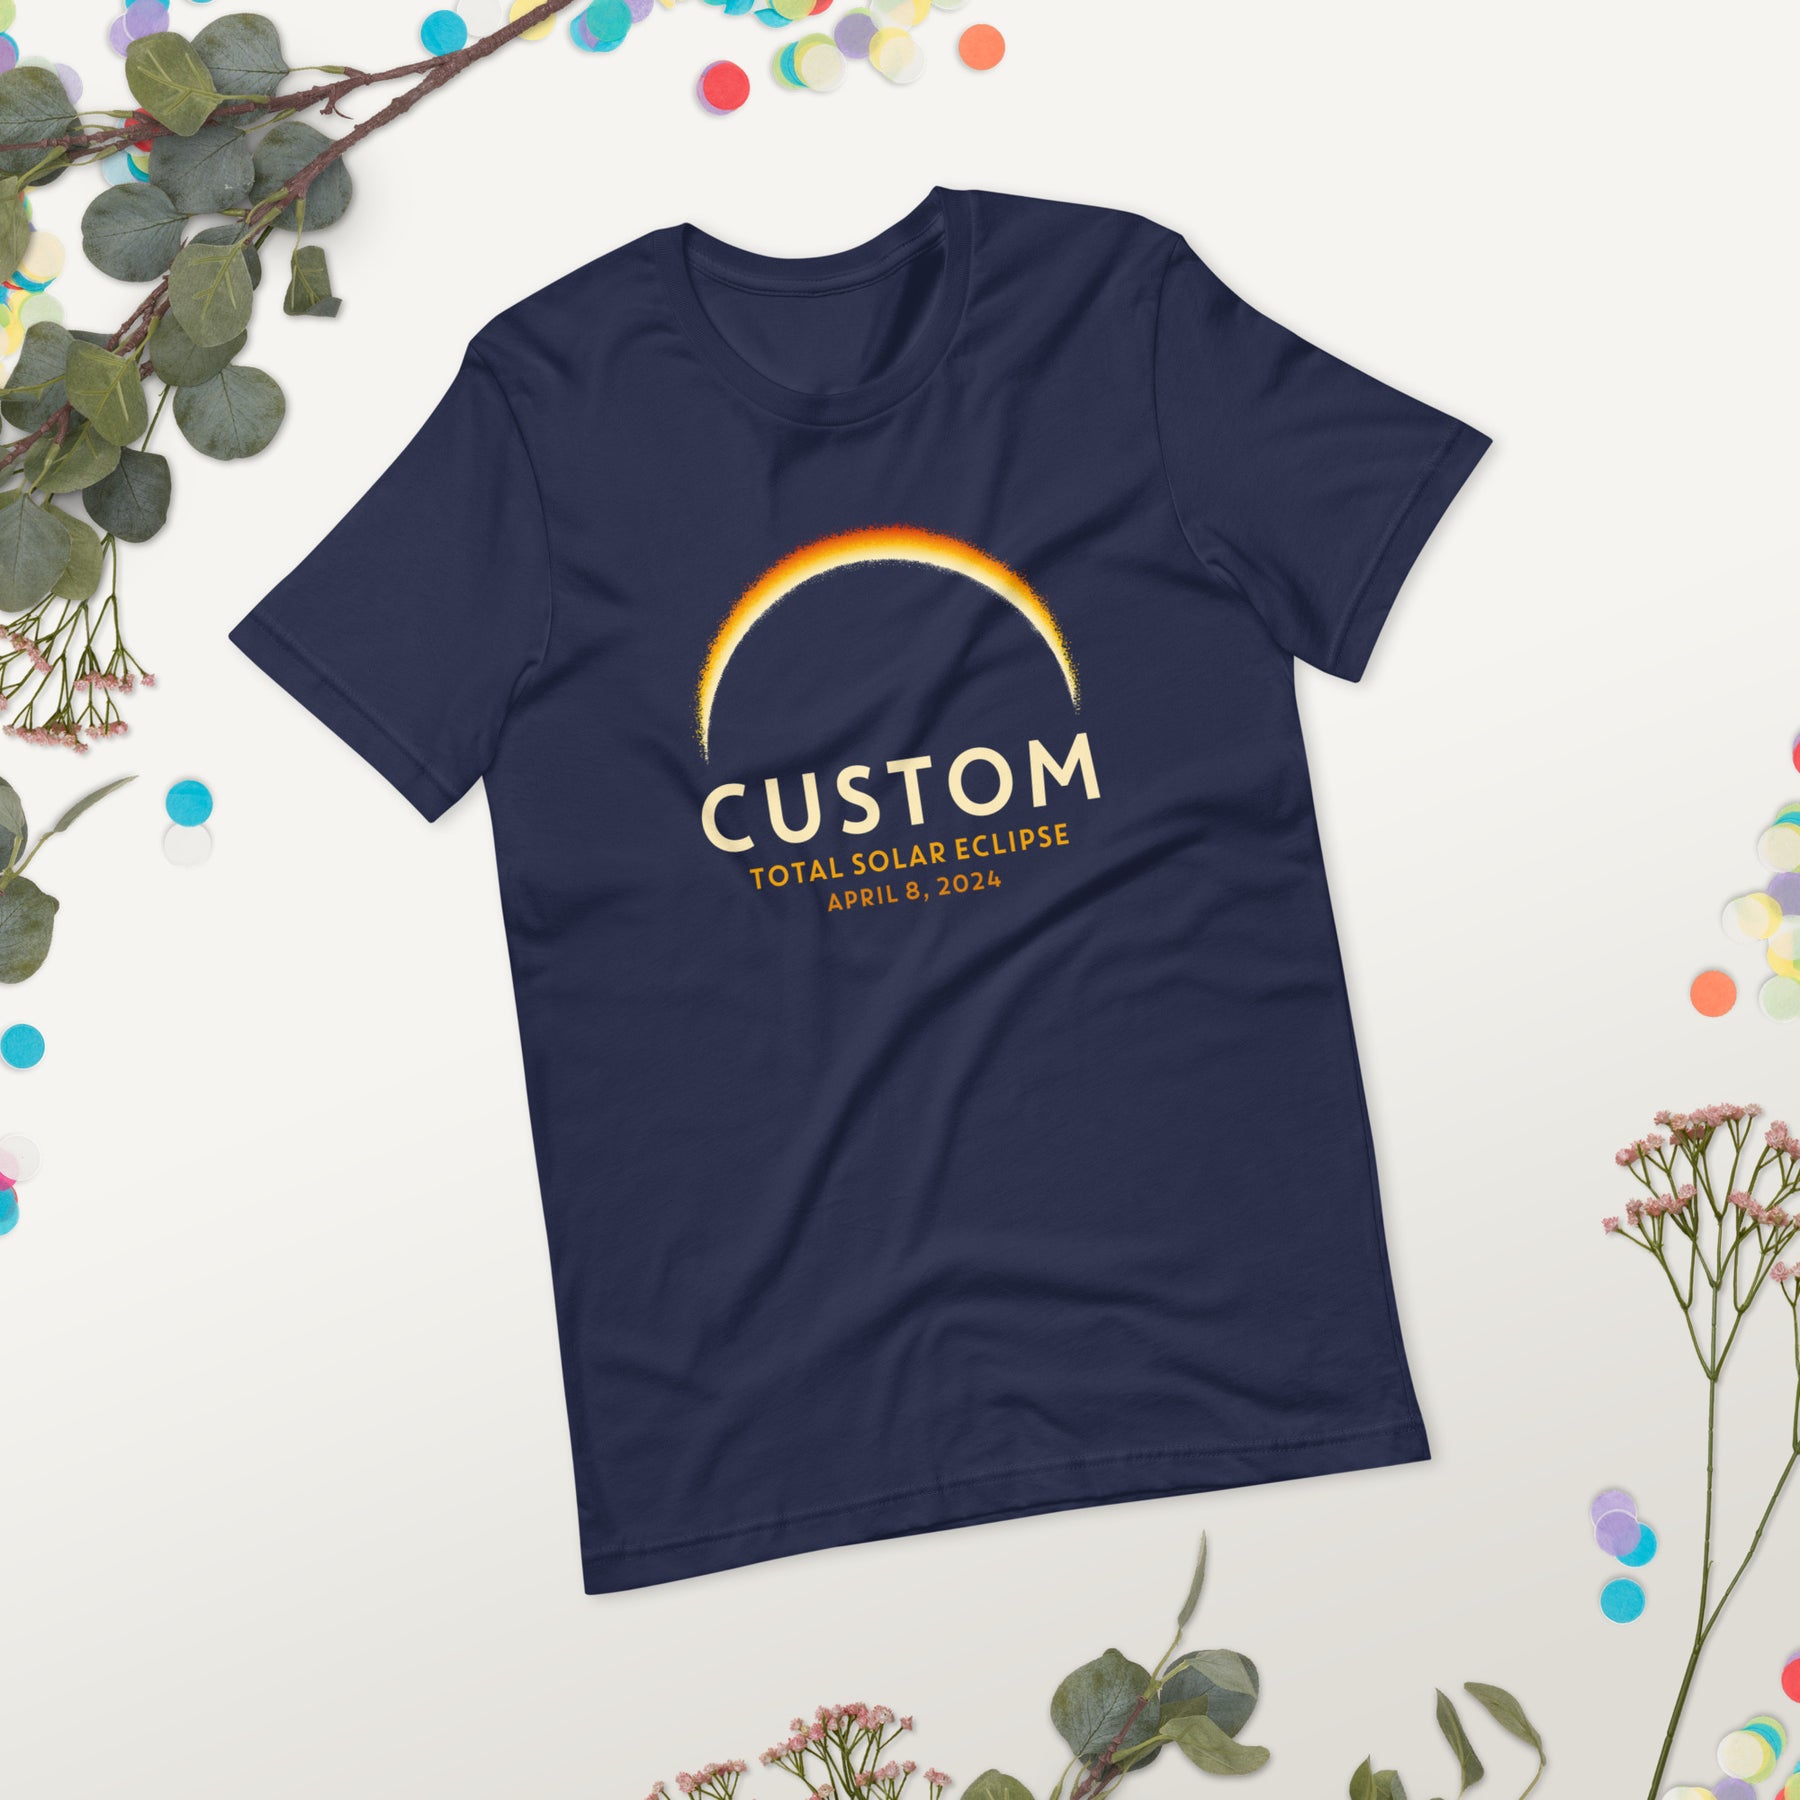 2024 Total Solar Eclipse Shirt - Customizable City/State Design, Family Eclipse Souvenir Gift